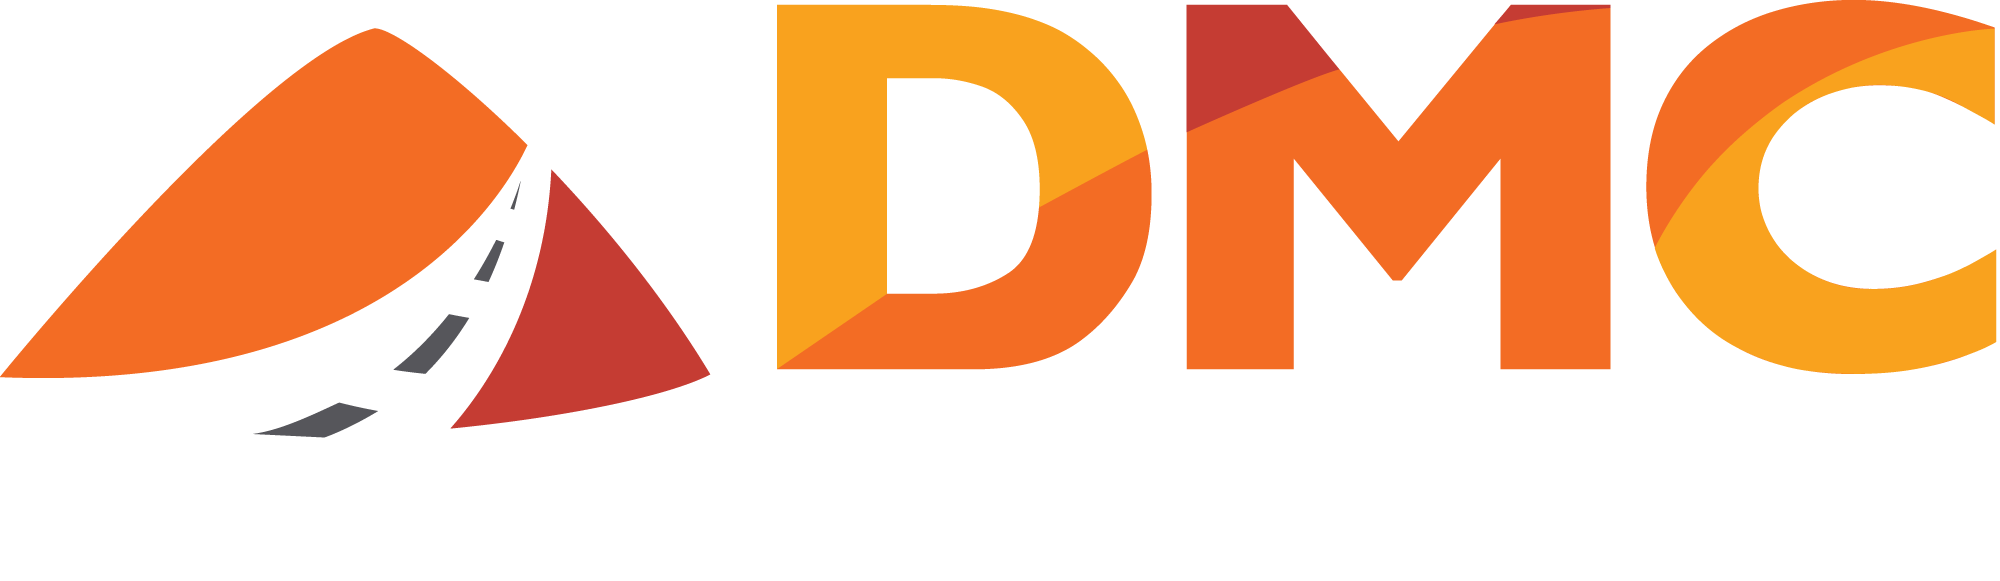 DMC Insurance Logo